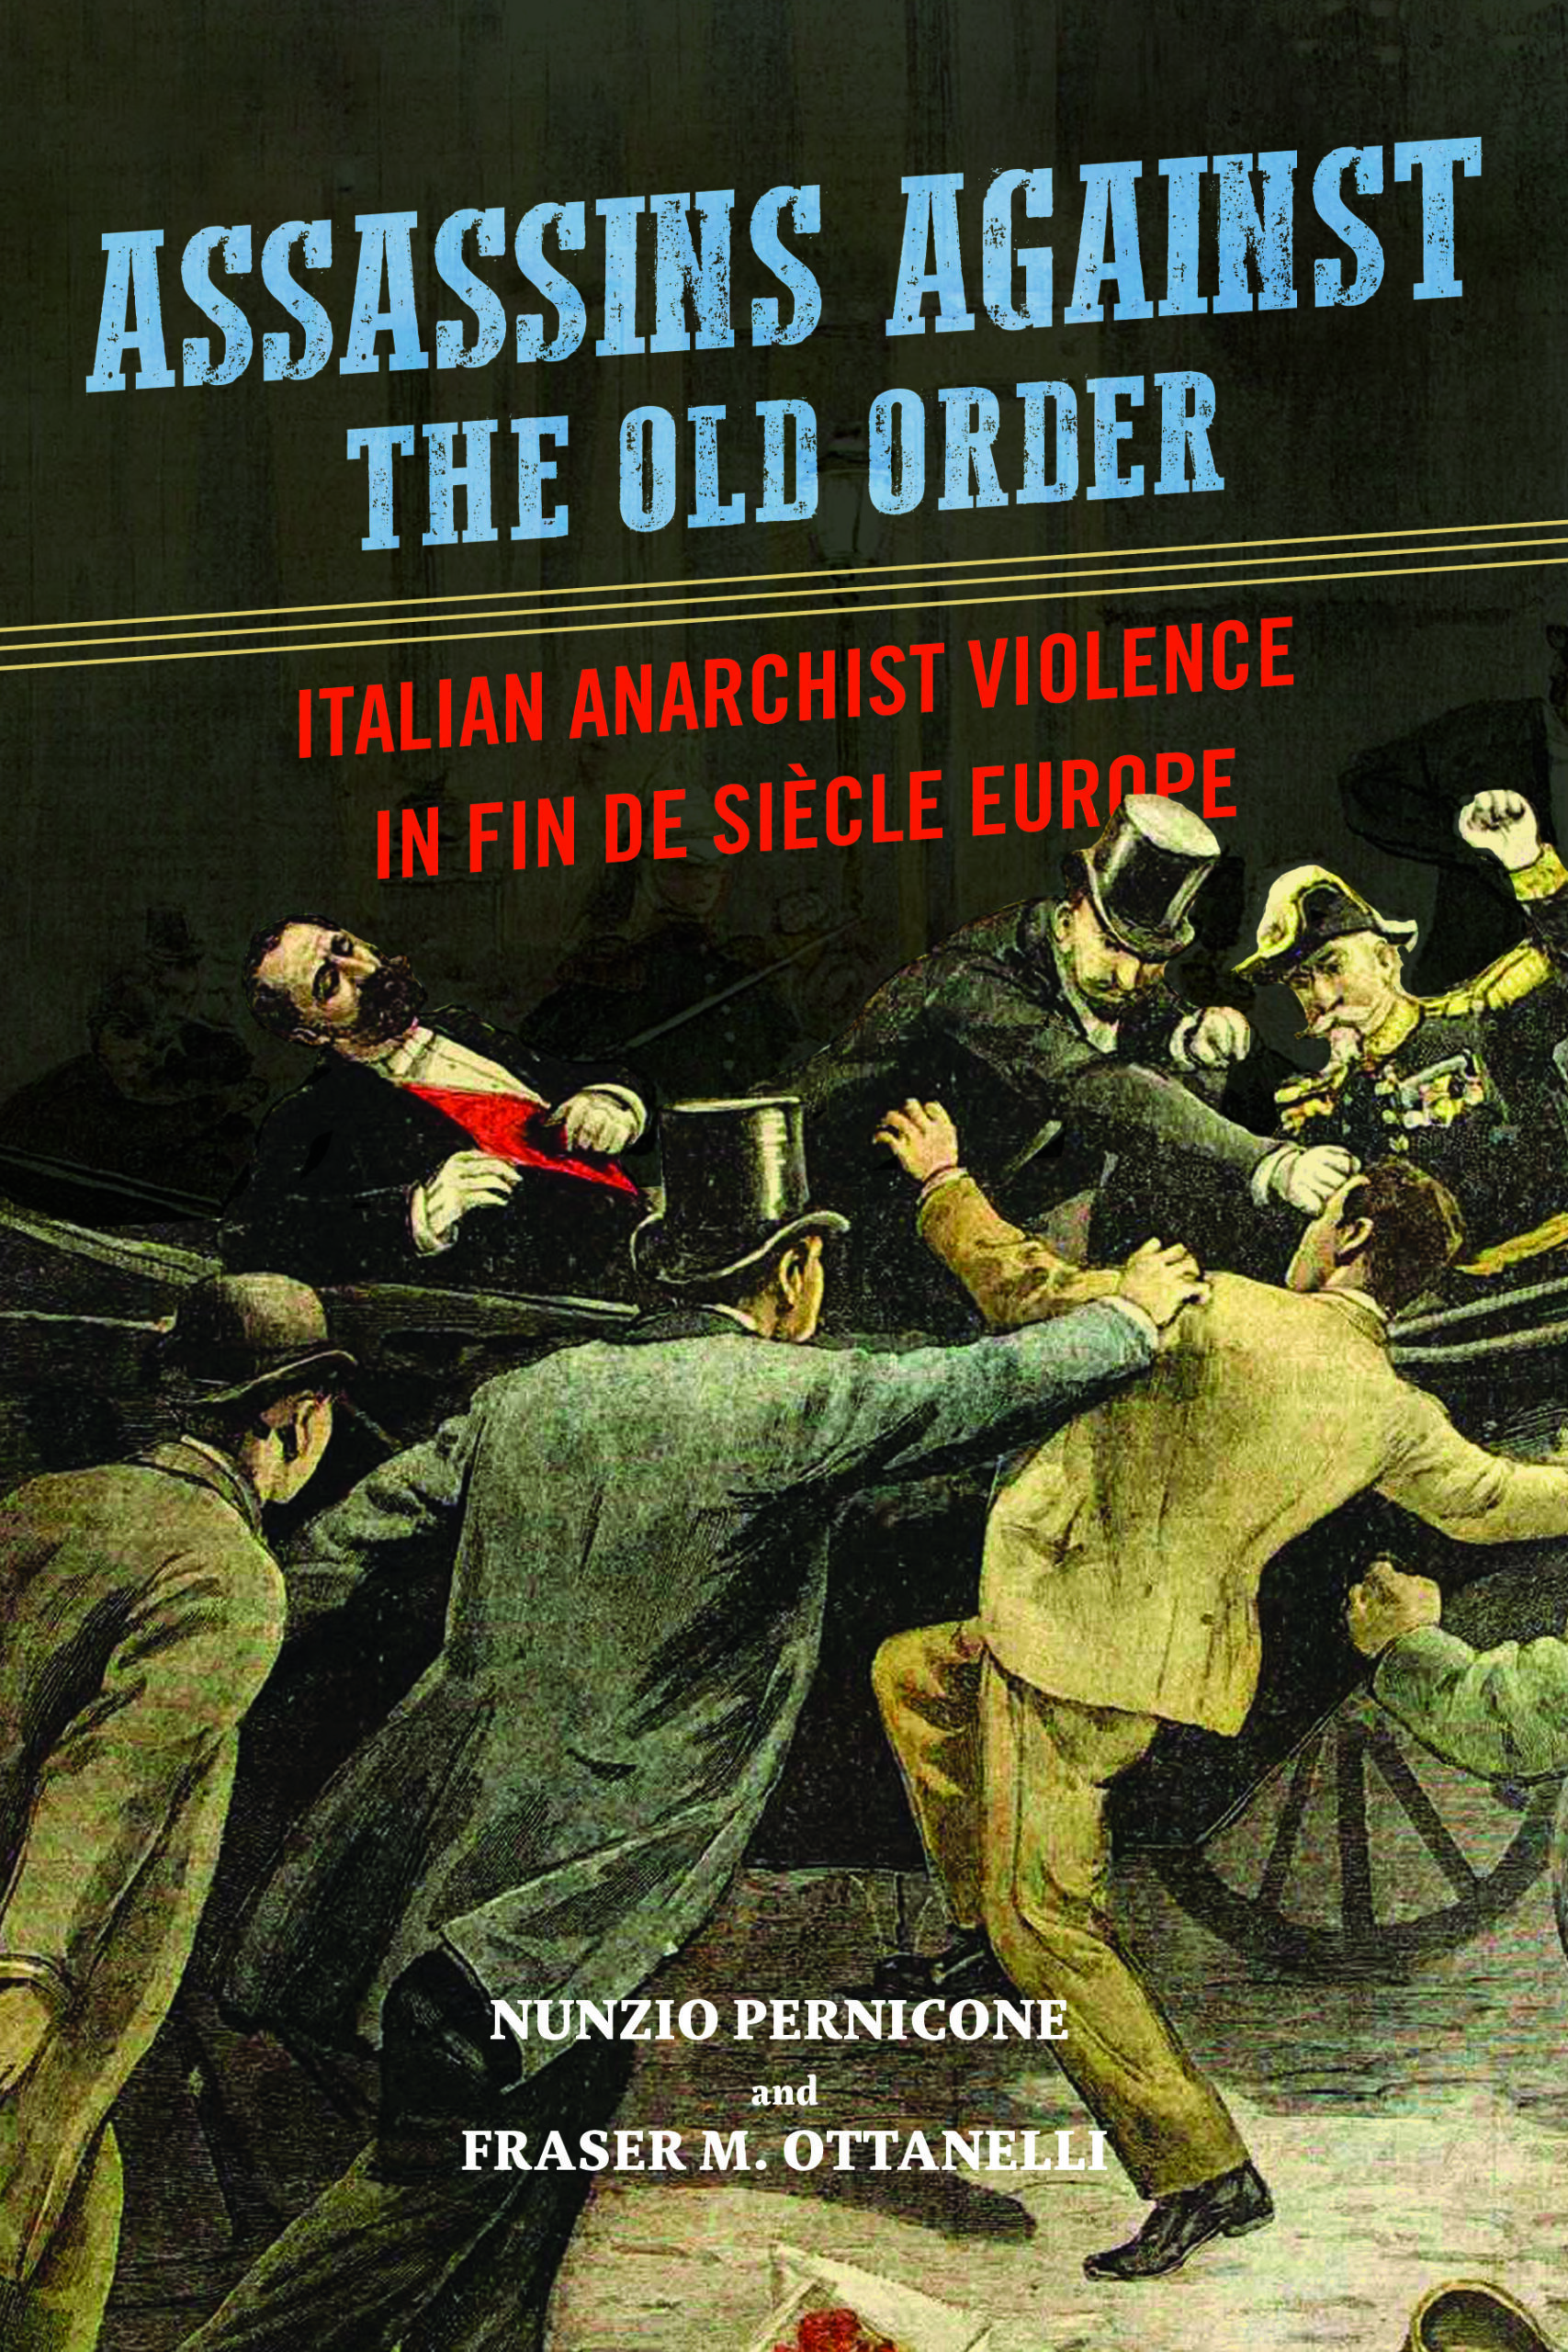 Anarchy 19 Century. Fin de siècle